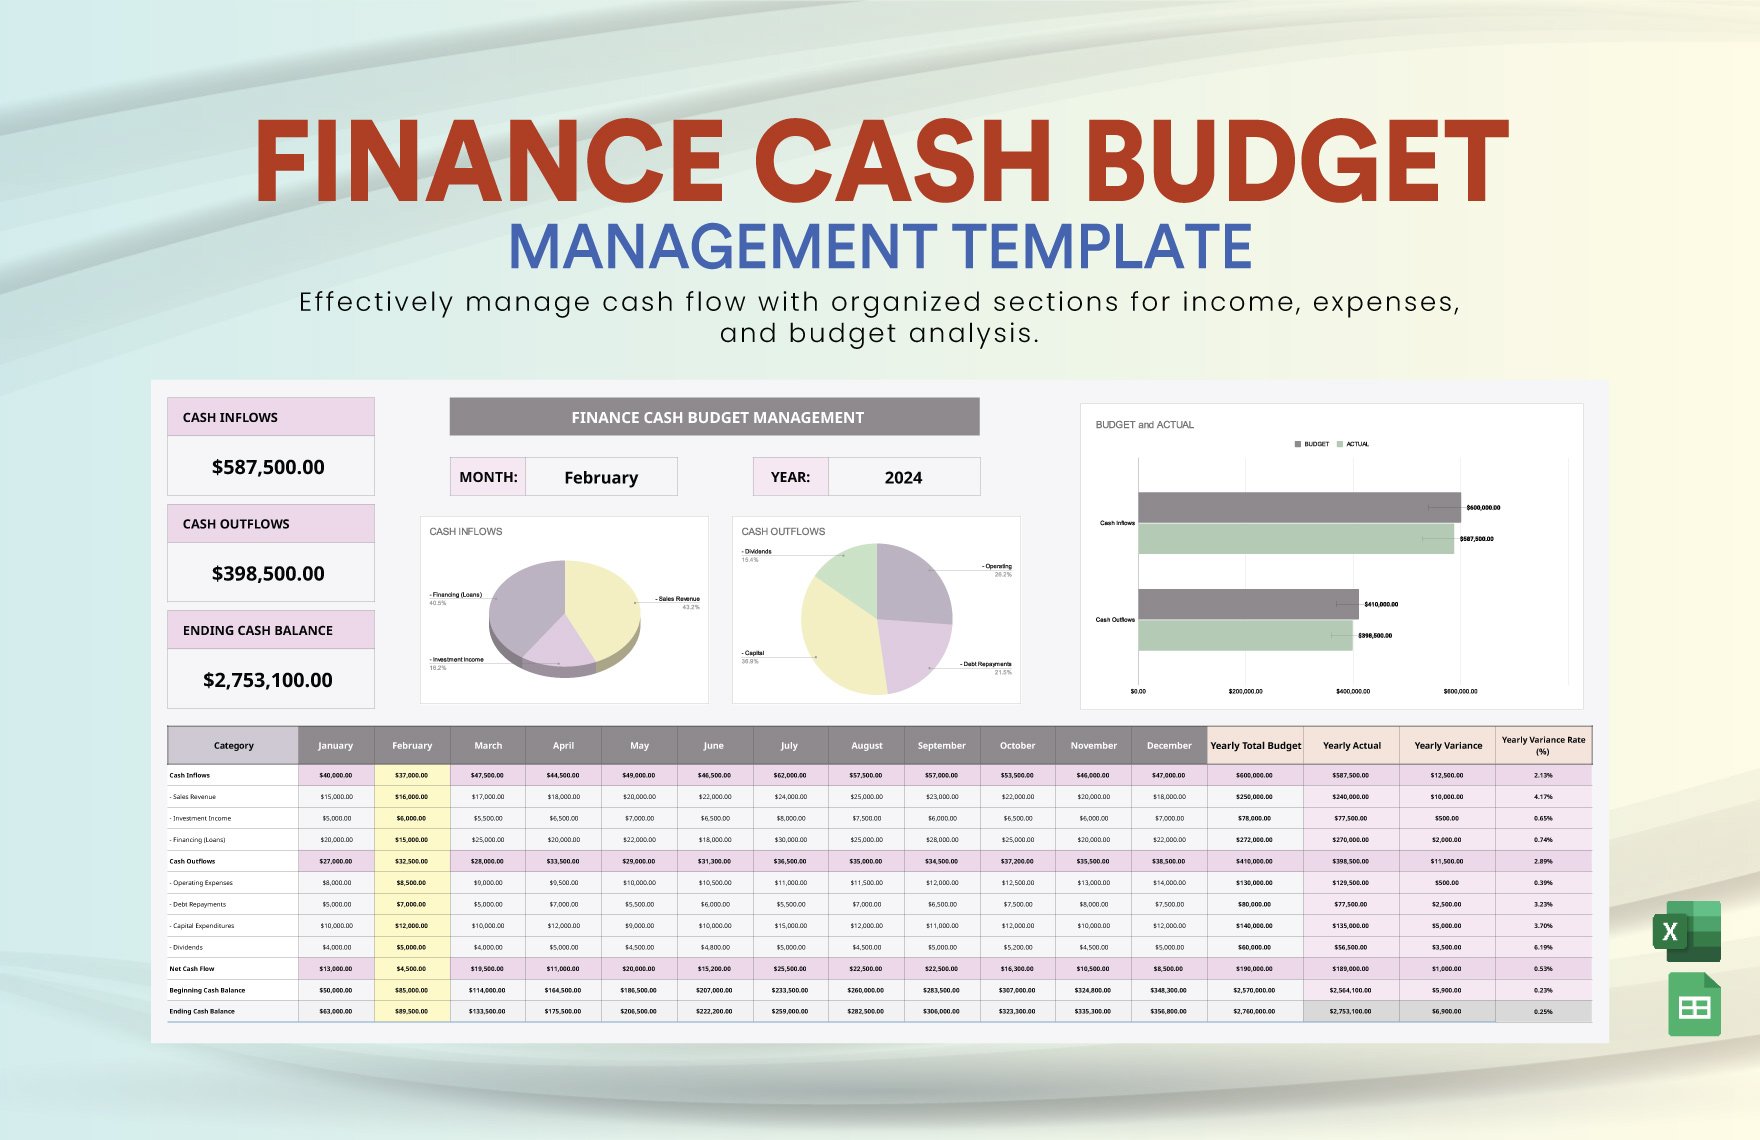 Finance Cash Budget Management Template